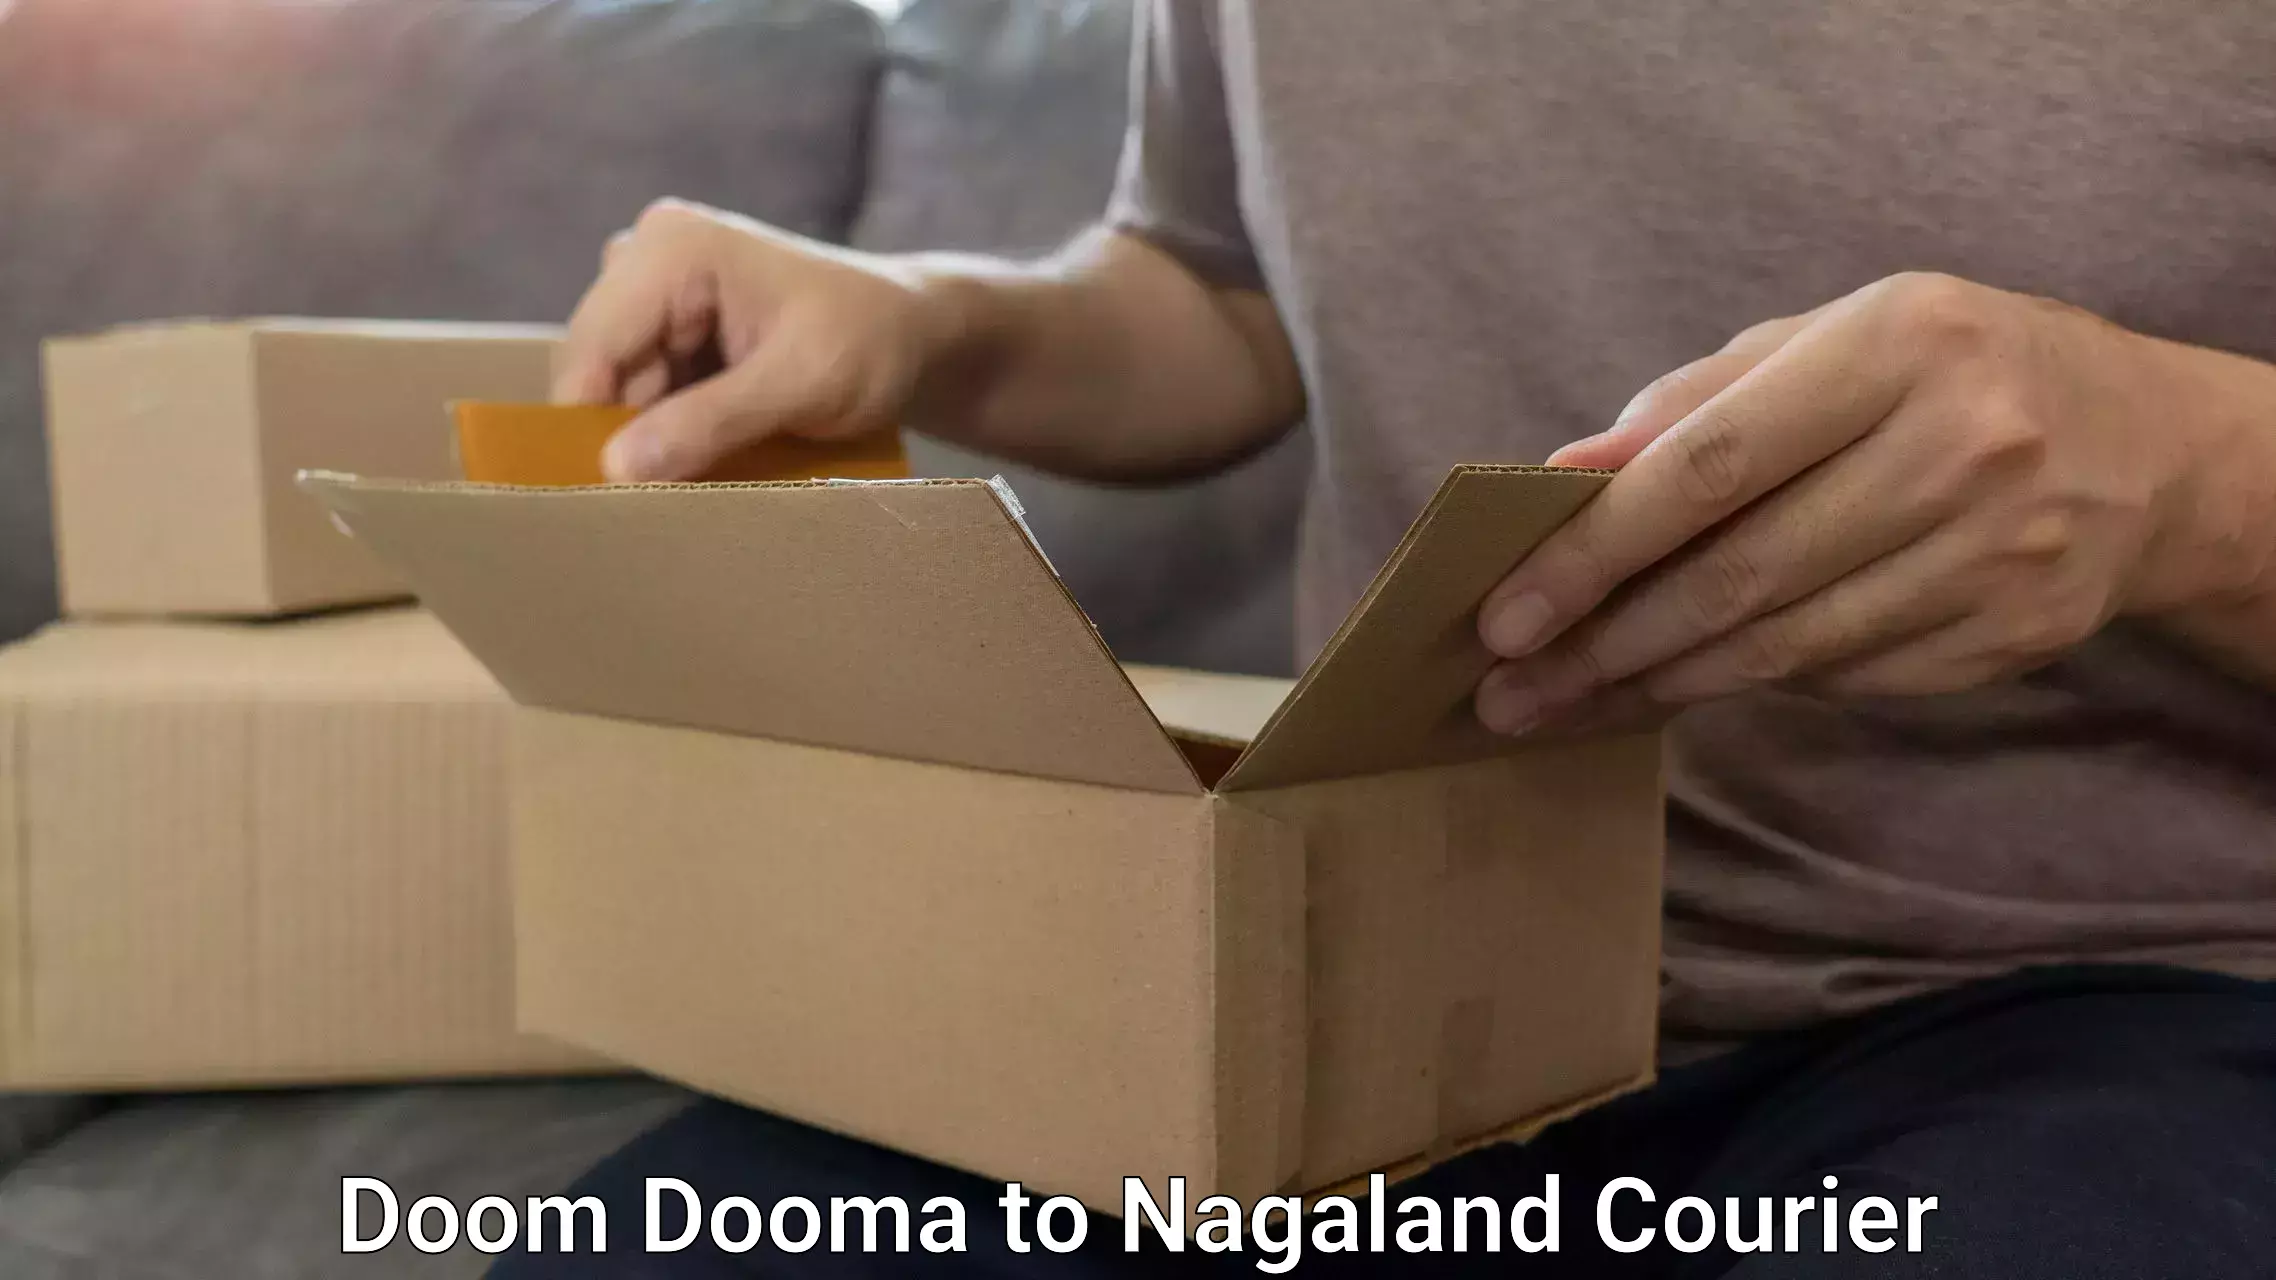 Emergency baggage service Doom Dooma to Nagaland